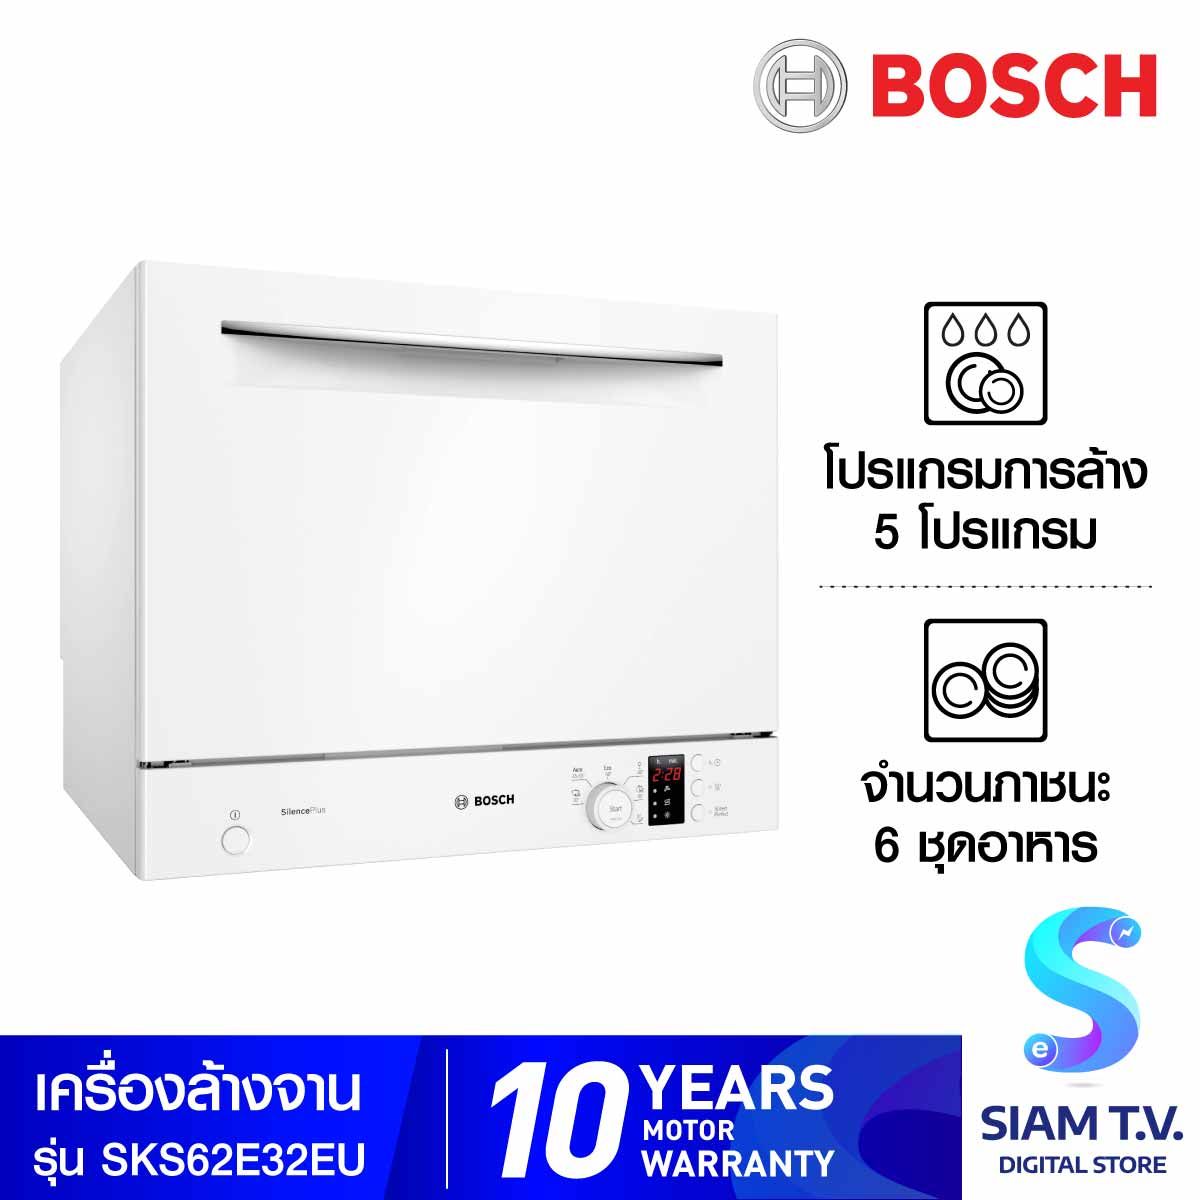 BOSCH เครื่องล้างจานแบบตั้งโต๊ะ 55 cm White ดิจิตอล ซีรี่ 4 รุ่น SKS62E32EU